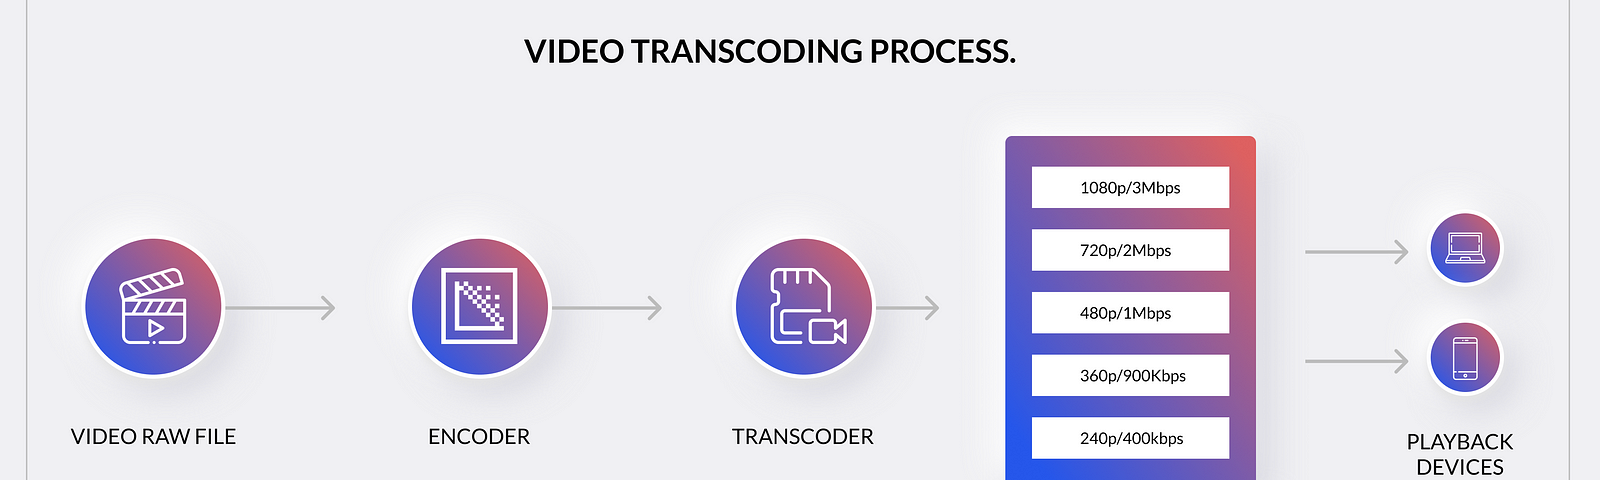 Video Transcoding Process